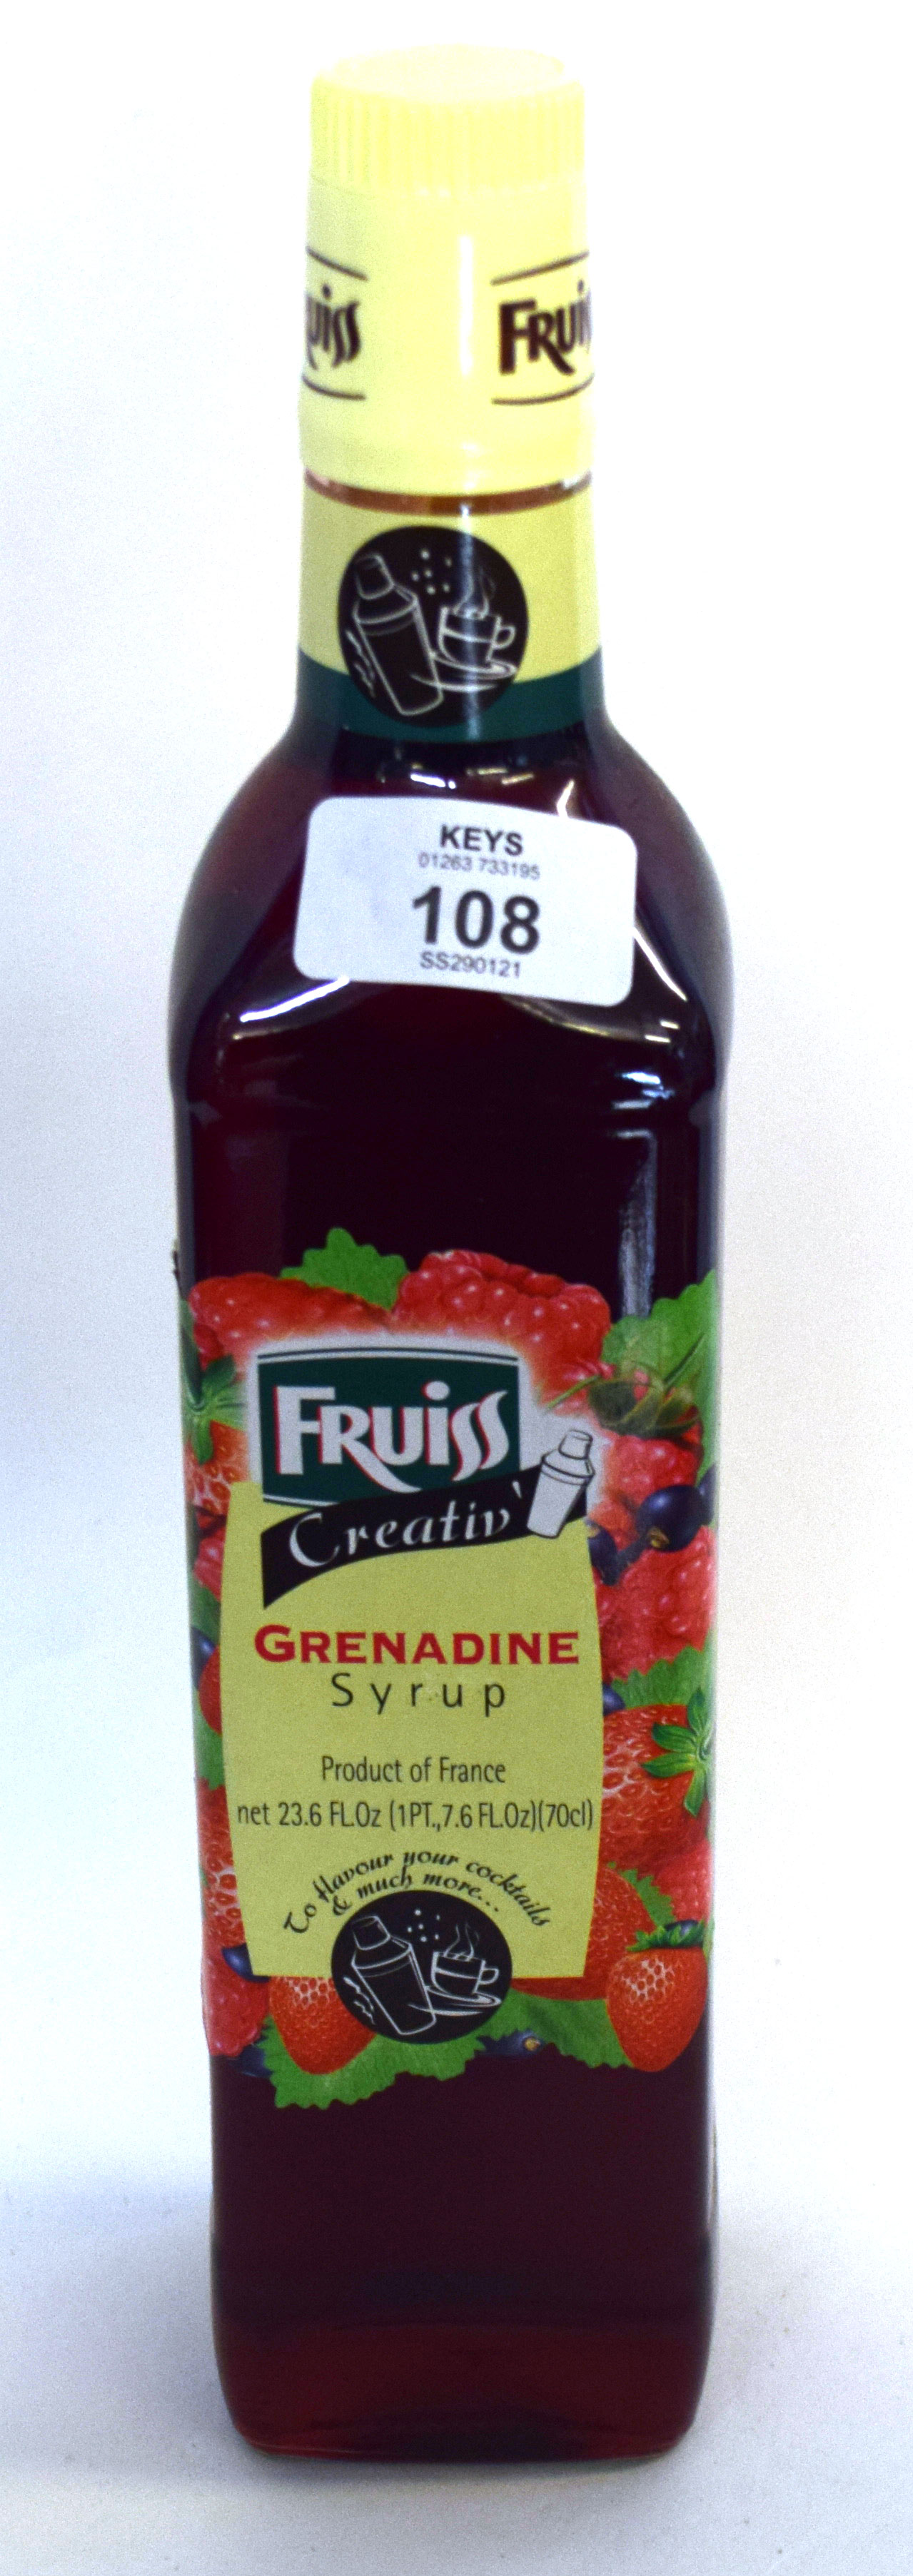 1 bottle Fruiss Grenadine Syrup